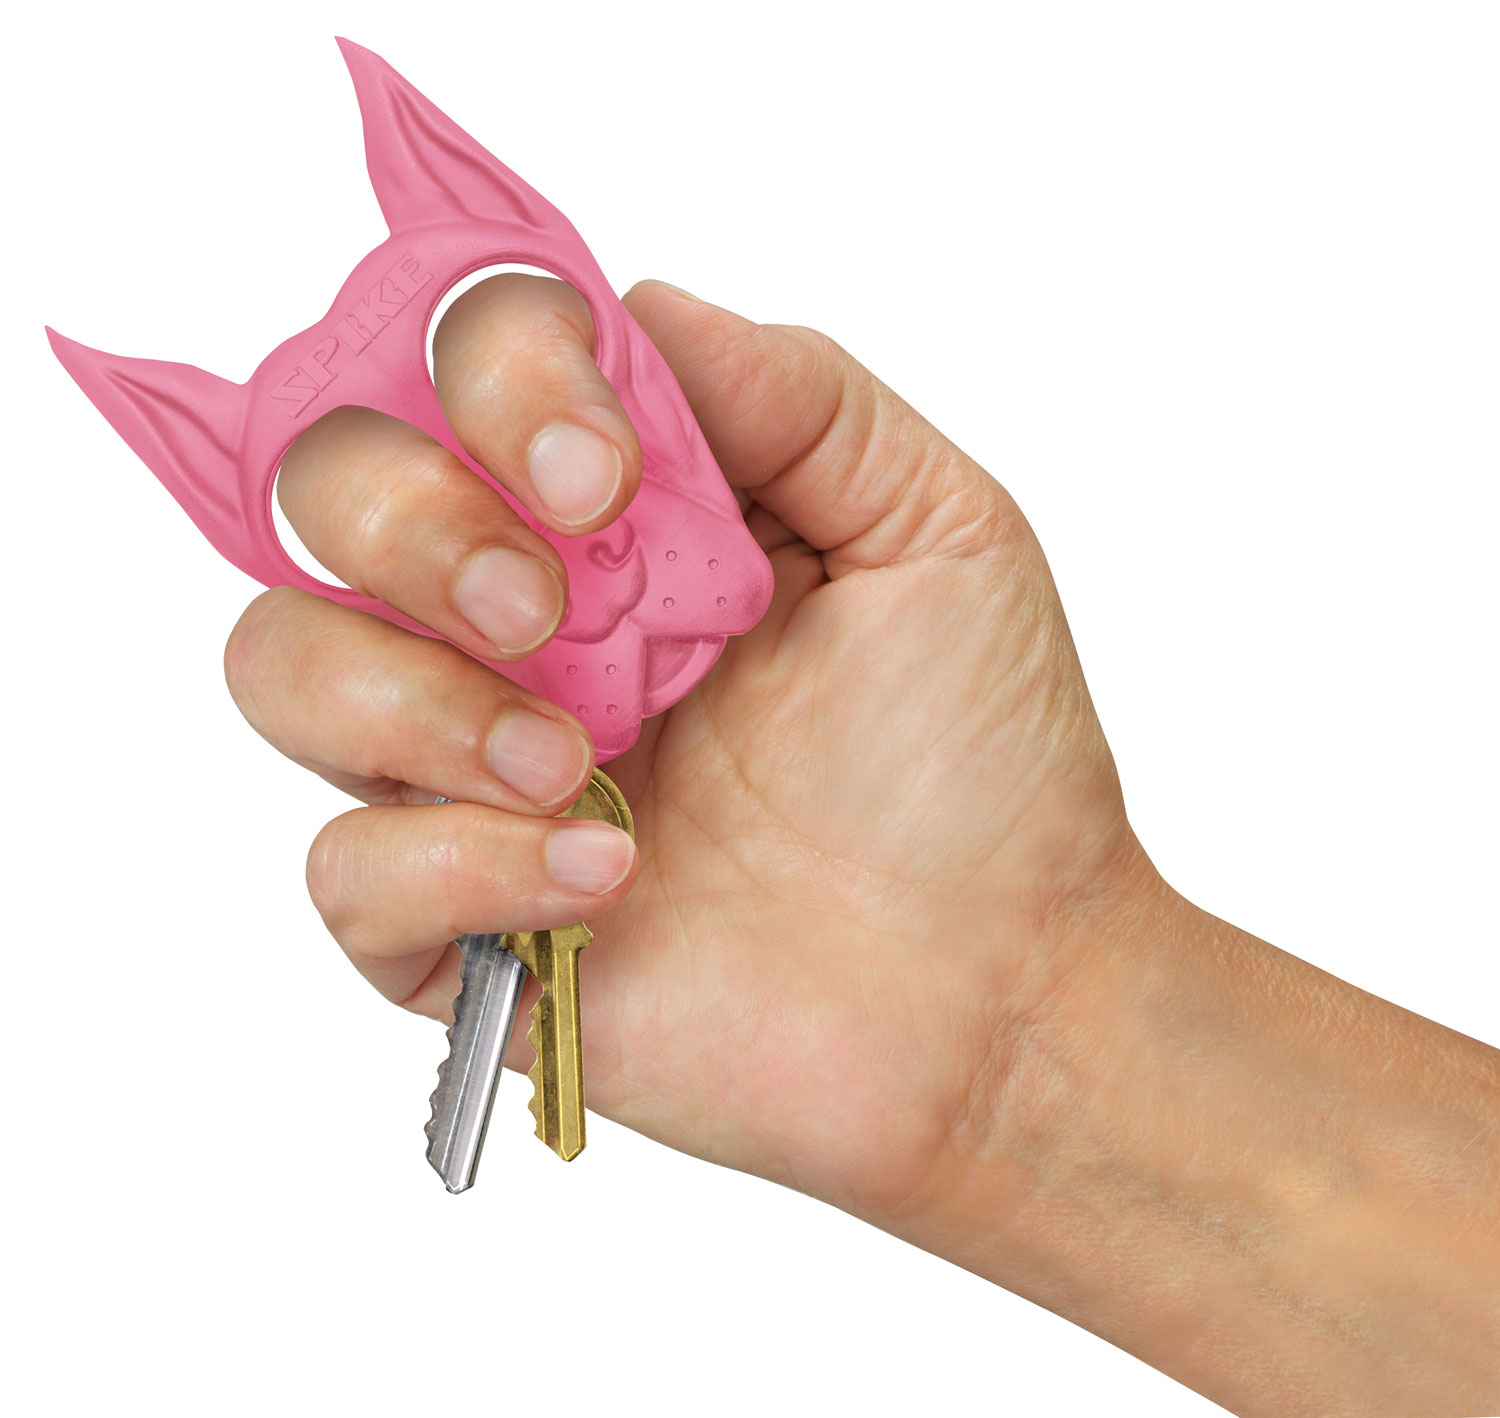 PSP SPIKEPK Spike Key Chain ABS Plastic Pink